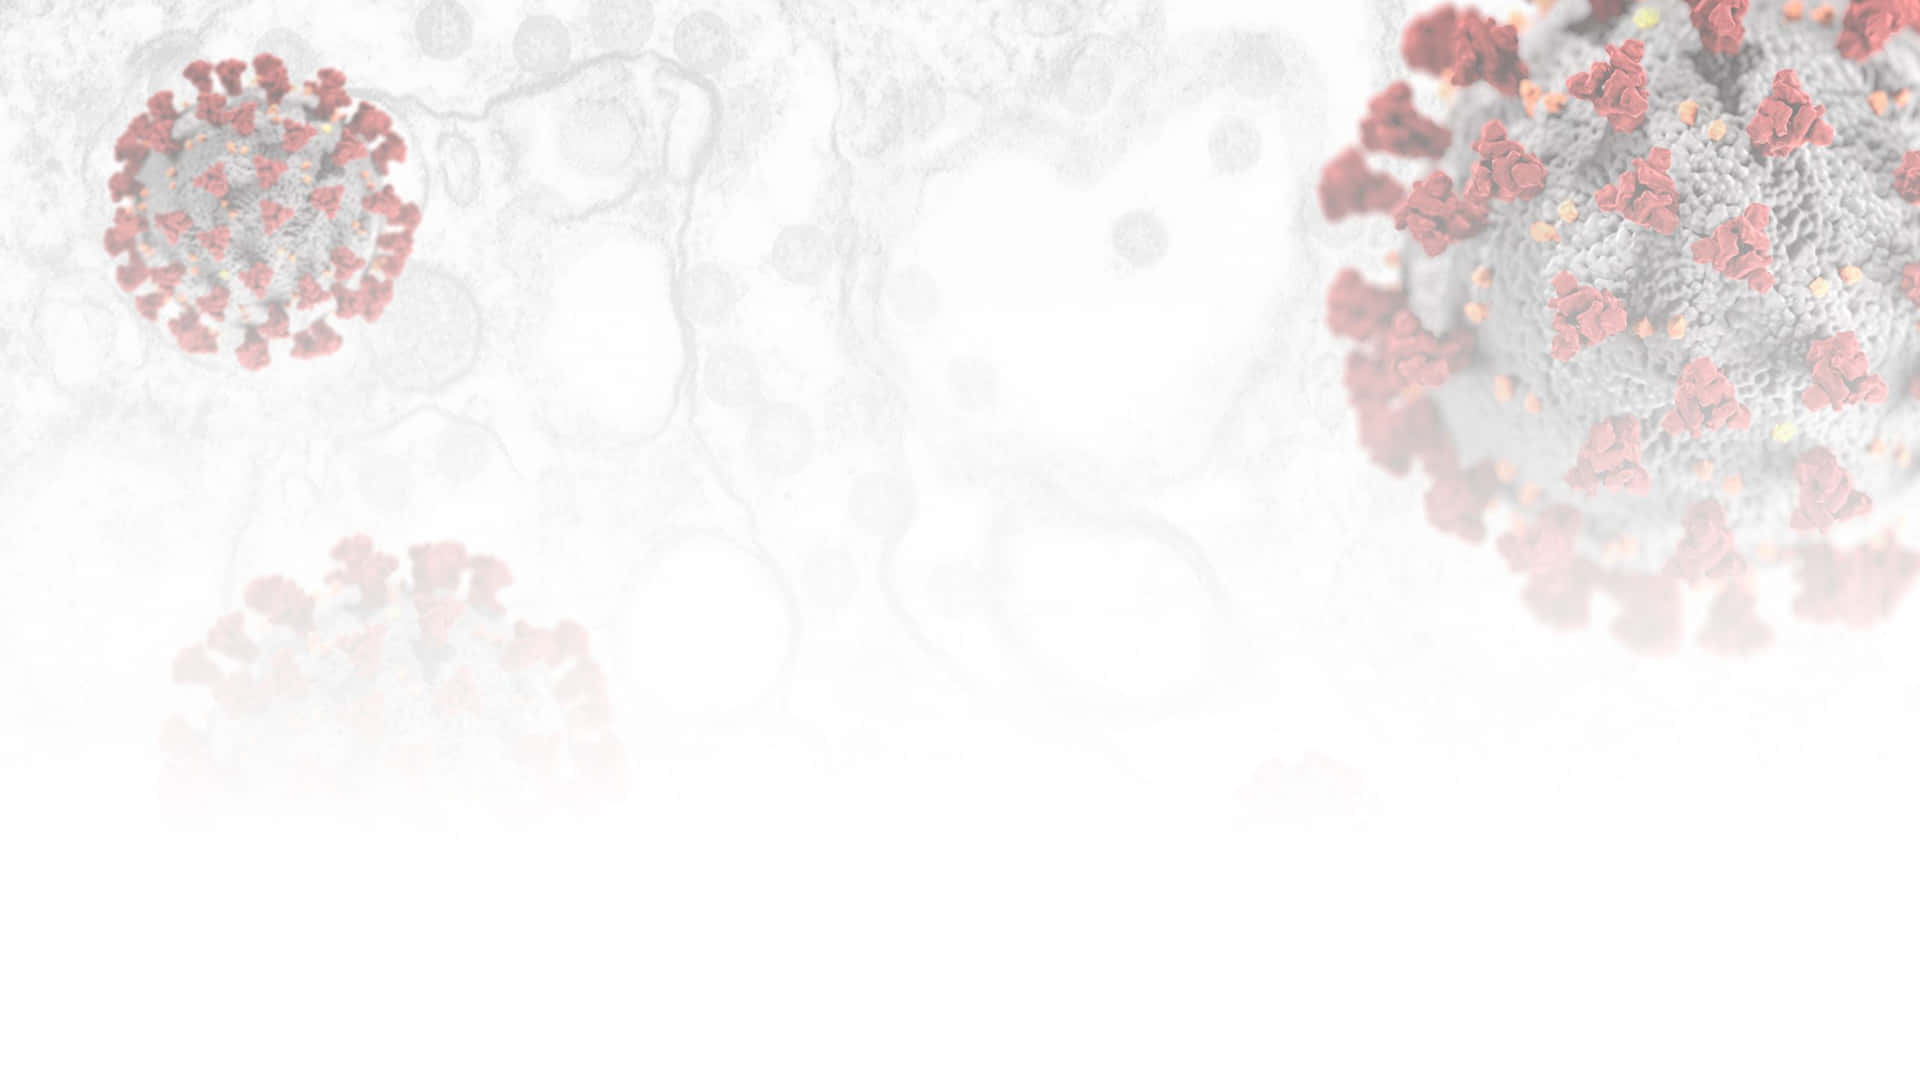 Coronaviruses In A White Background